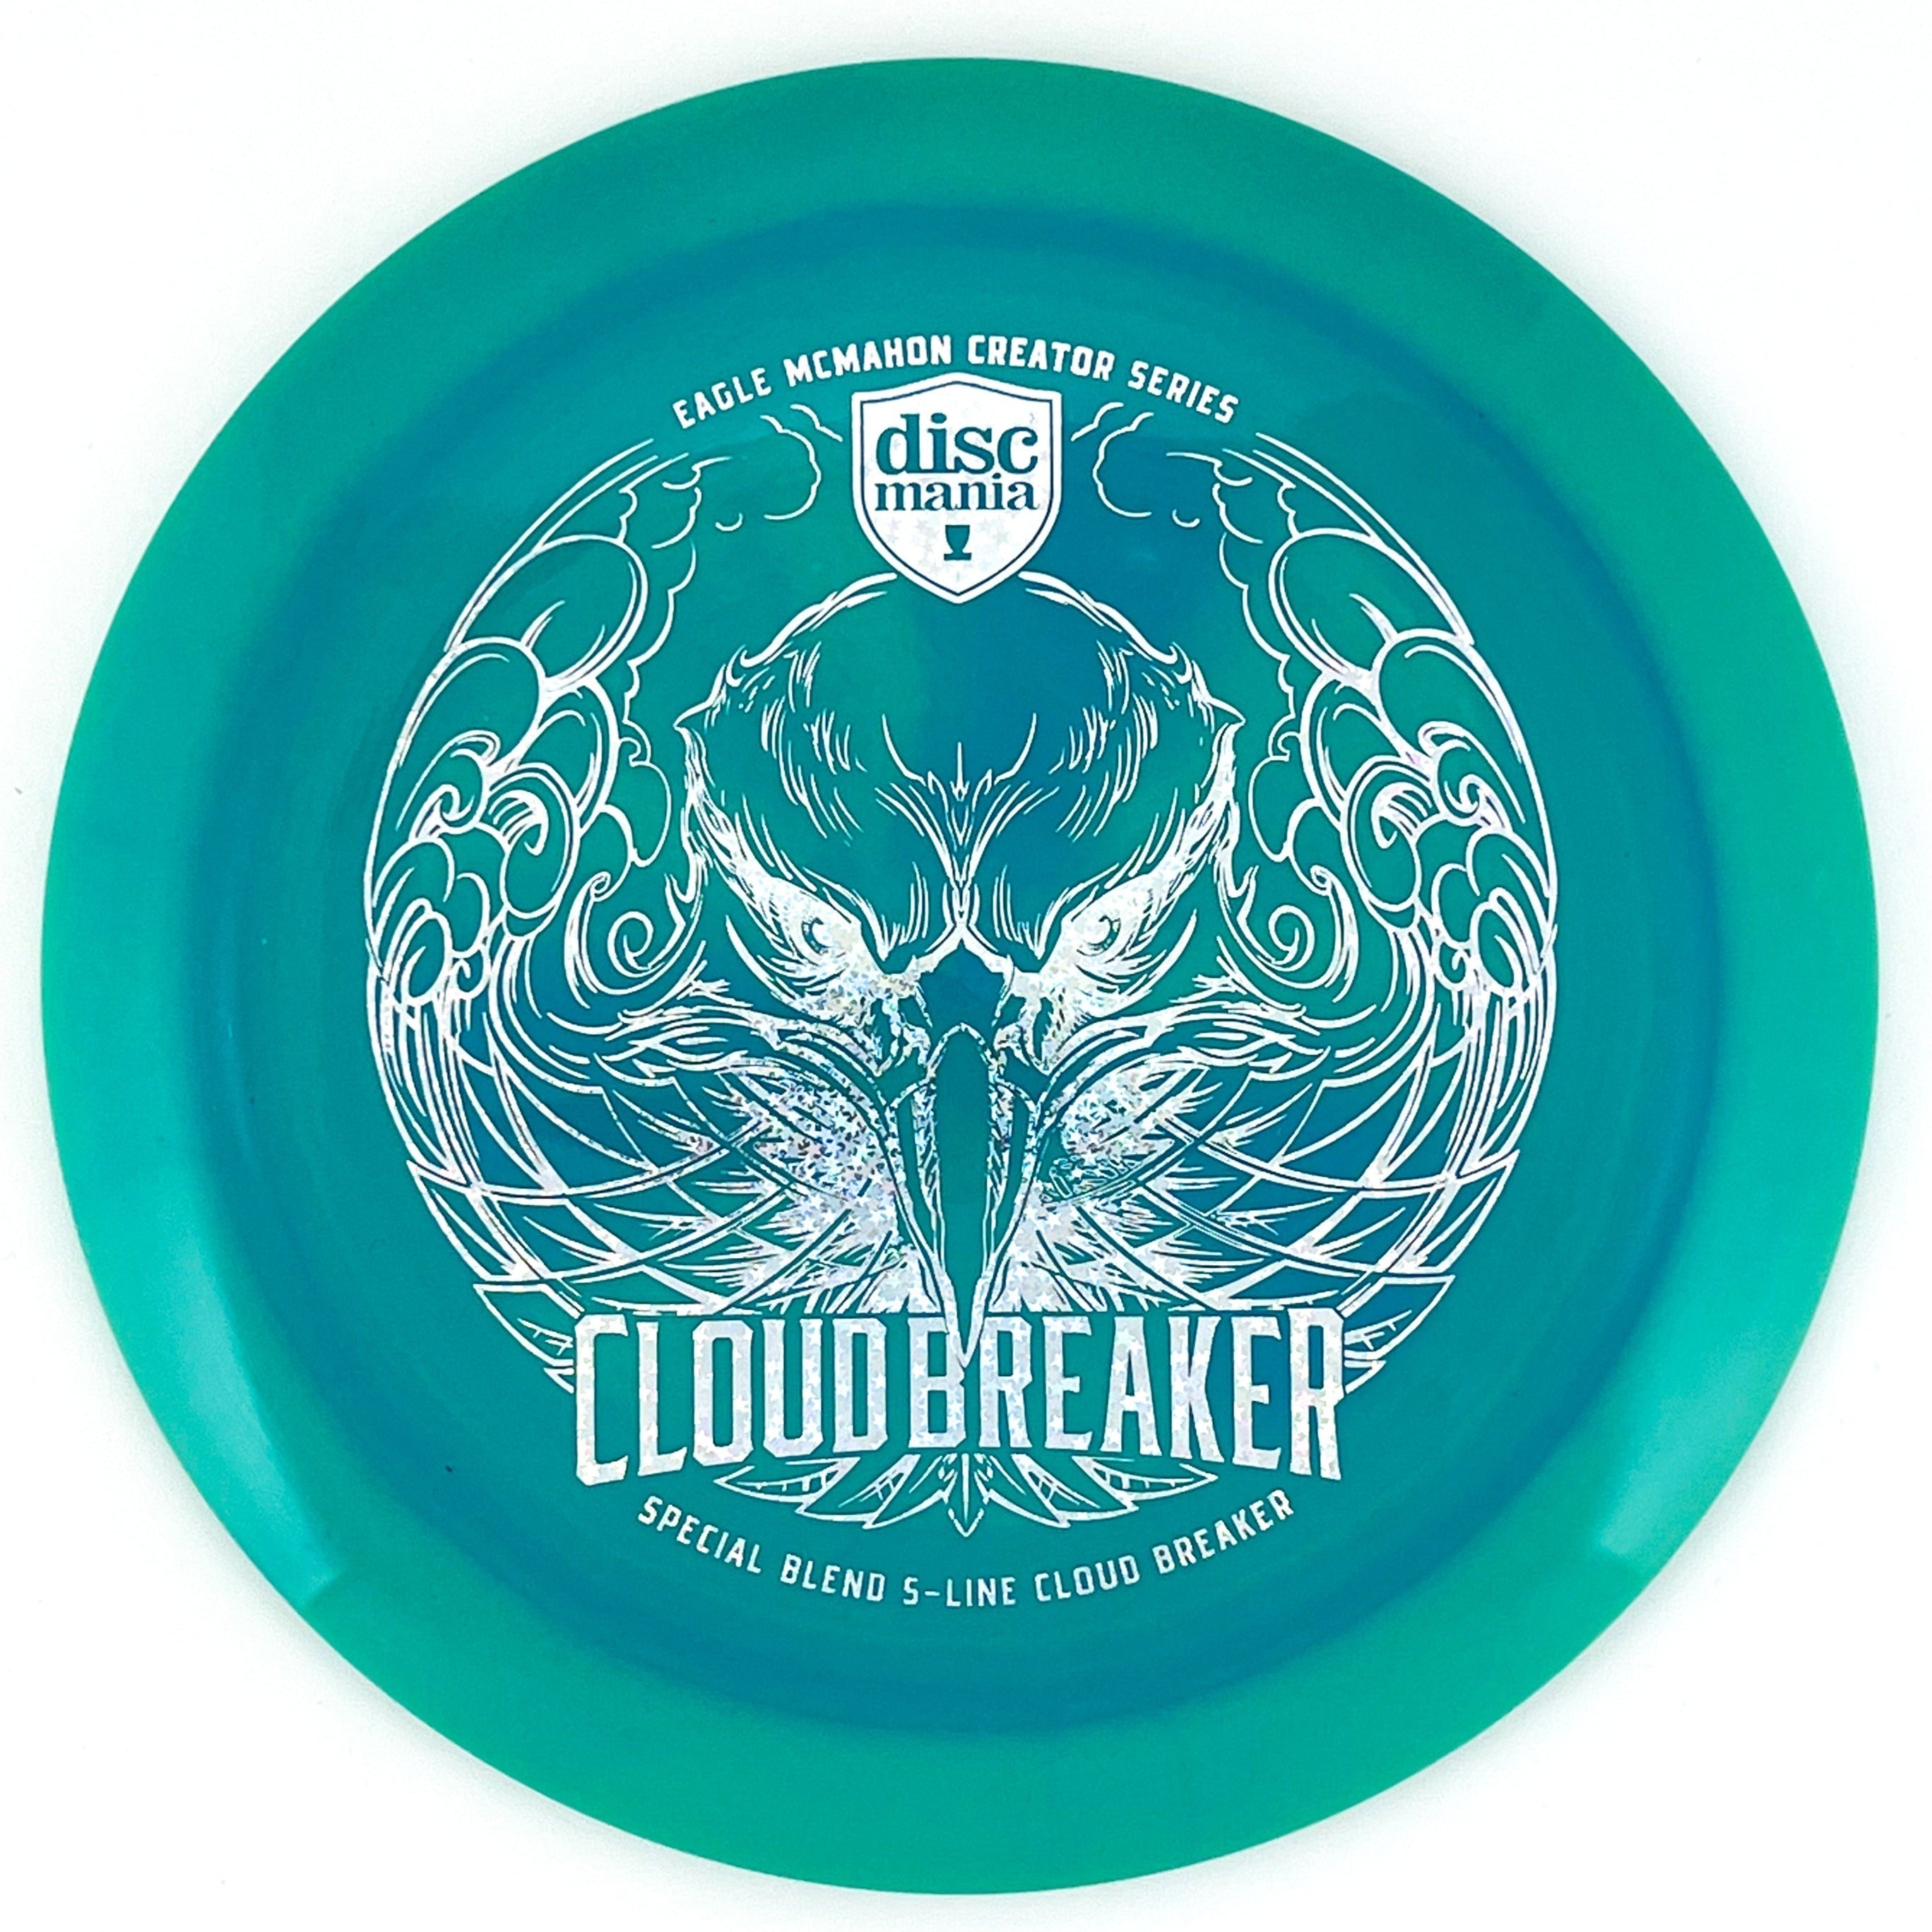 Teal Eagle McMahon Creator Series Cloud Breaker disc golf distance driver by Discmania Golf Discs.